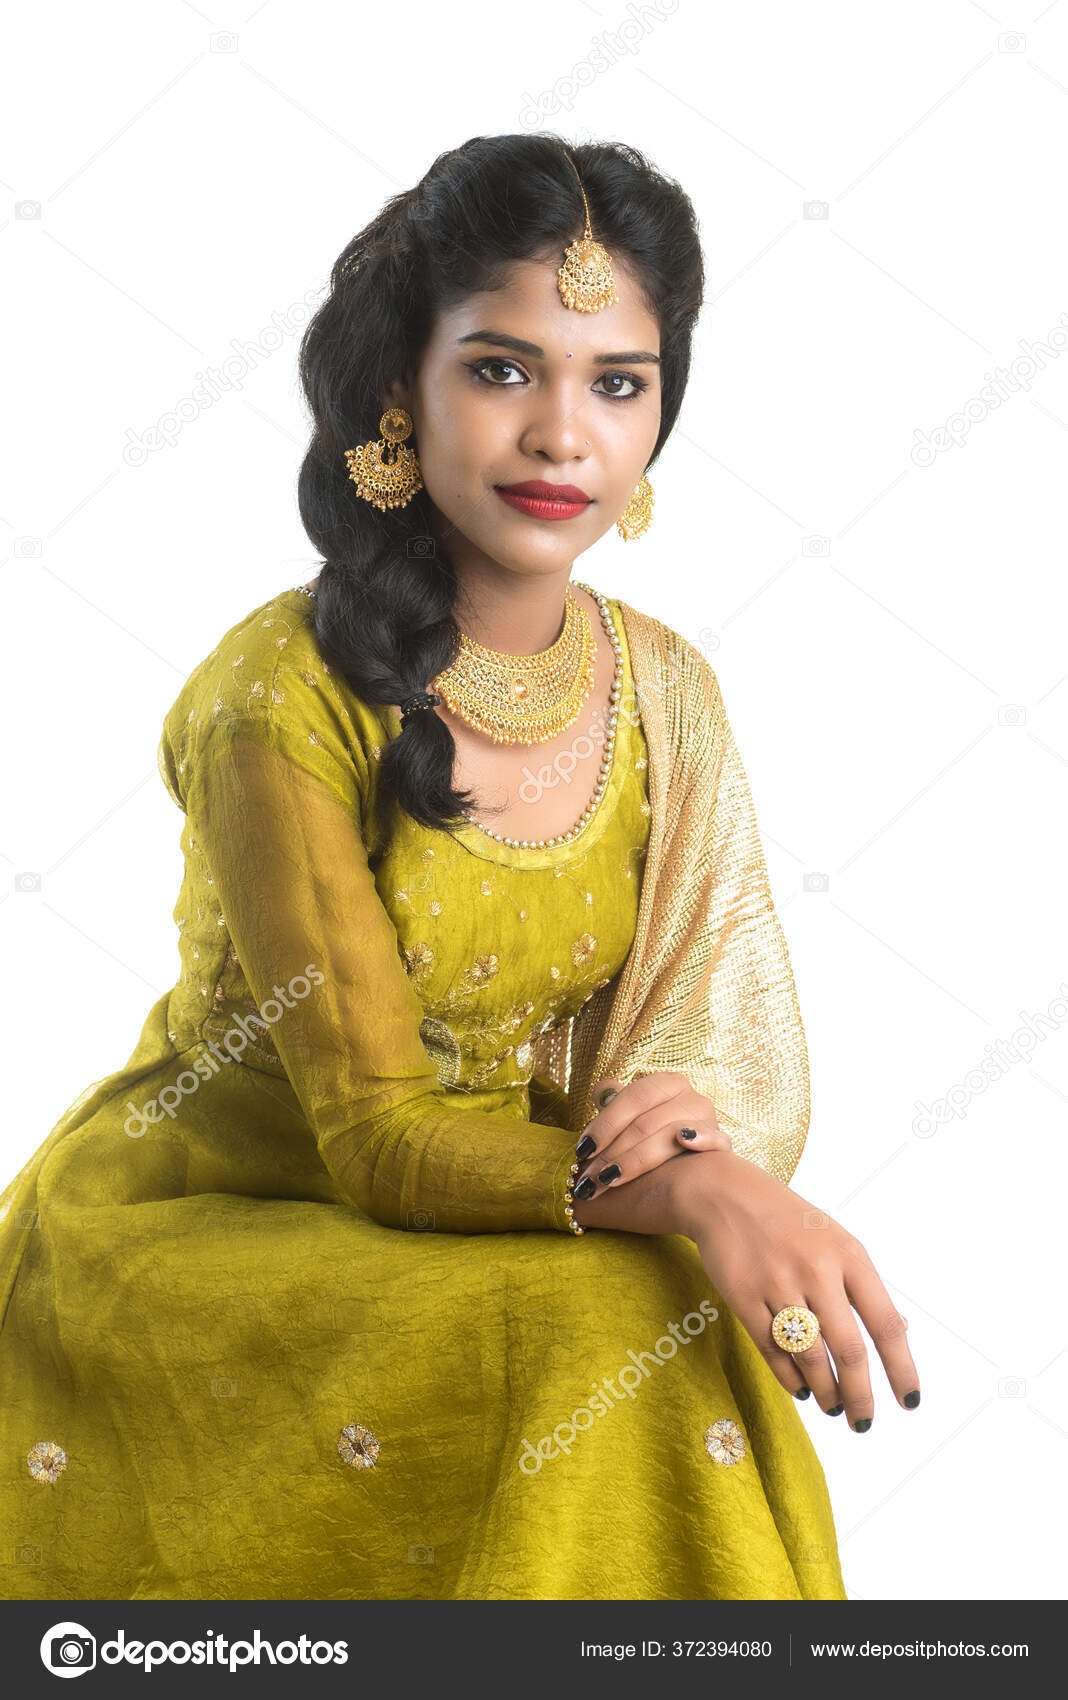 Woman Wearing Traditional Dress · Free Stock Photo